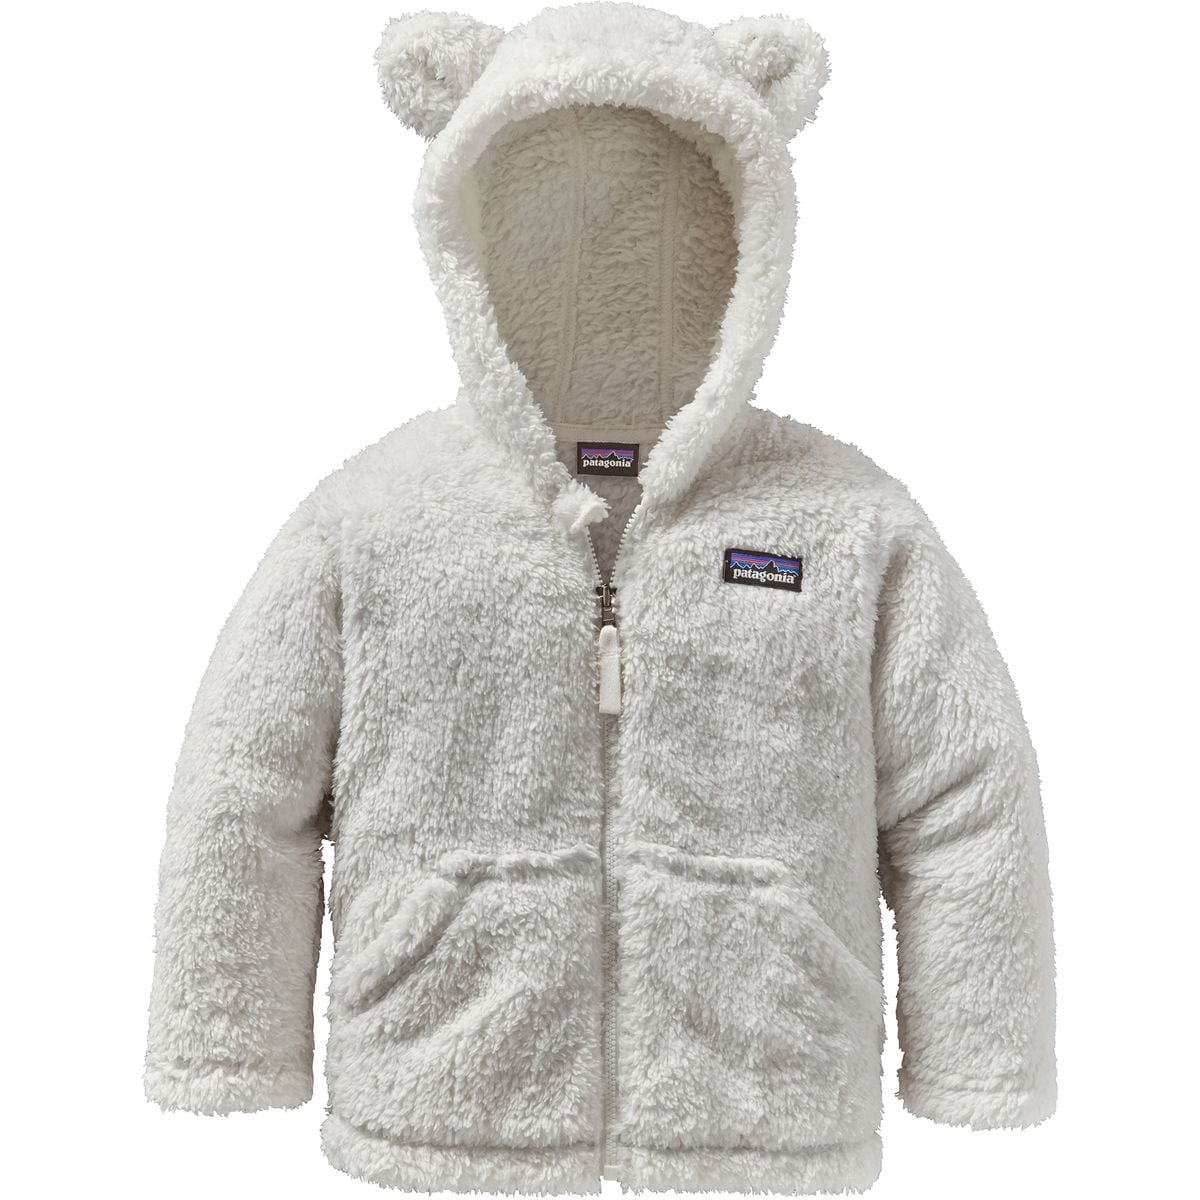 Patagonia Furry Friends Fleece Hooded Jacket - Infants' | Backcountry